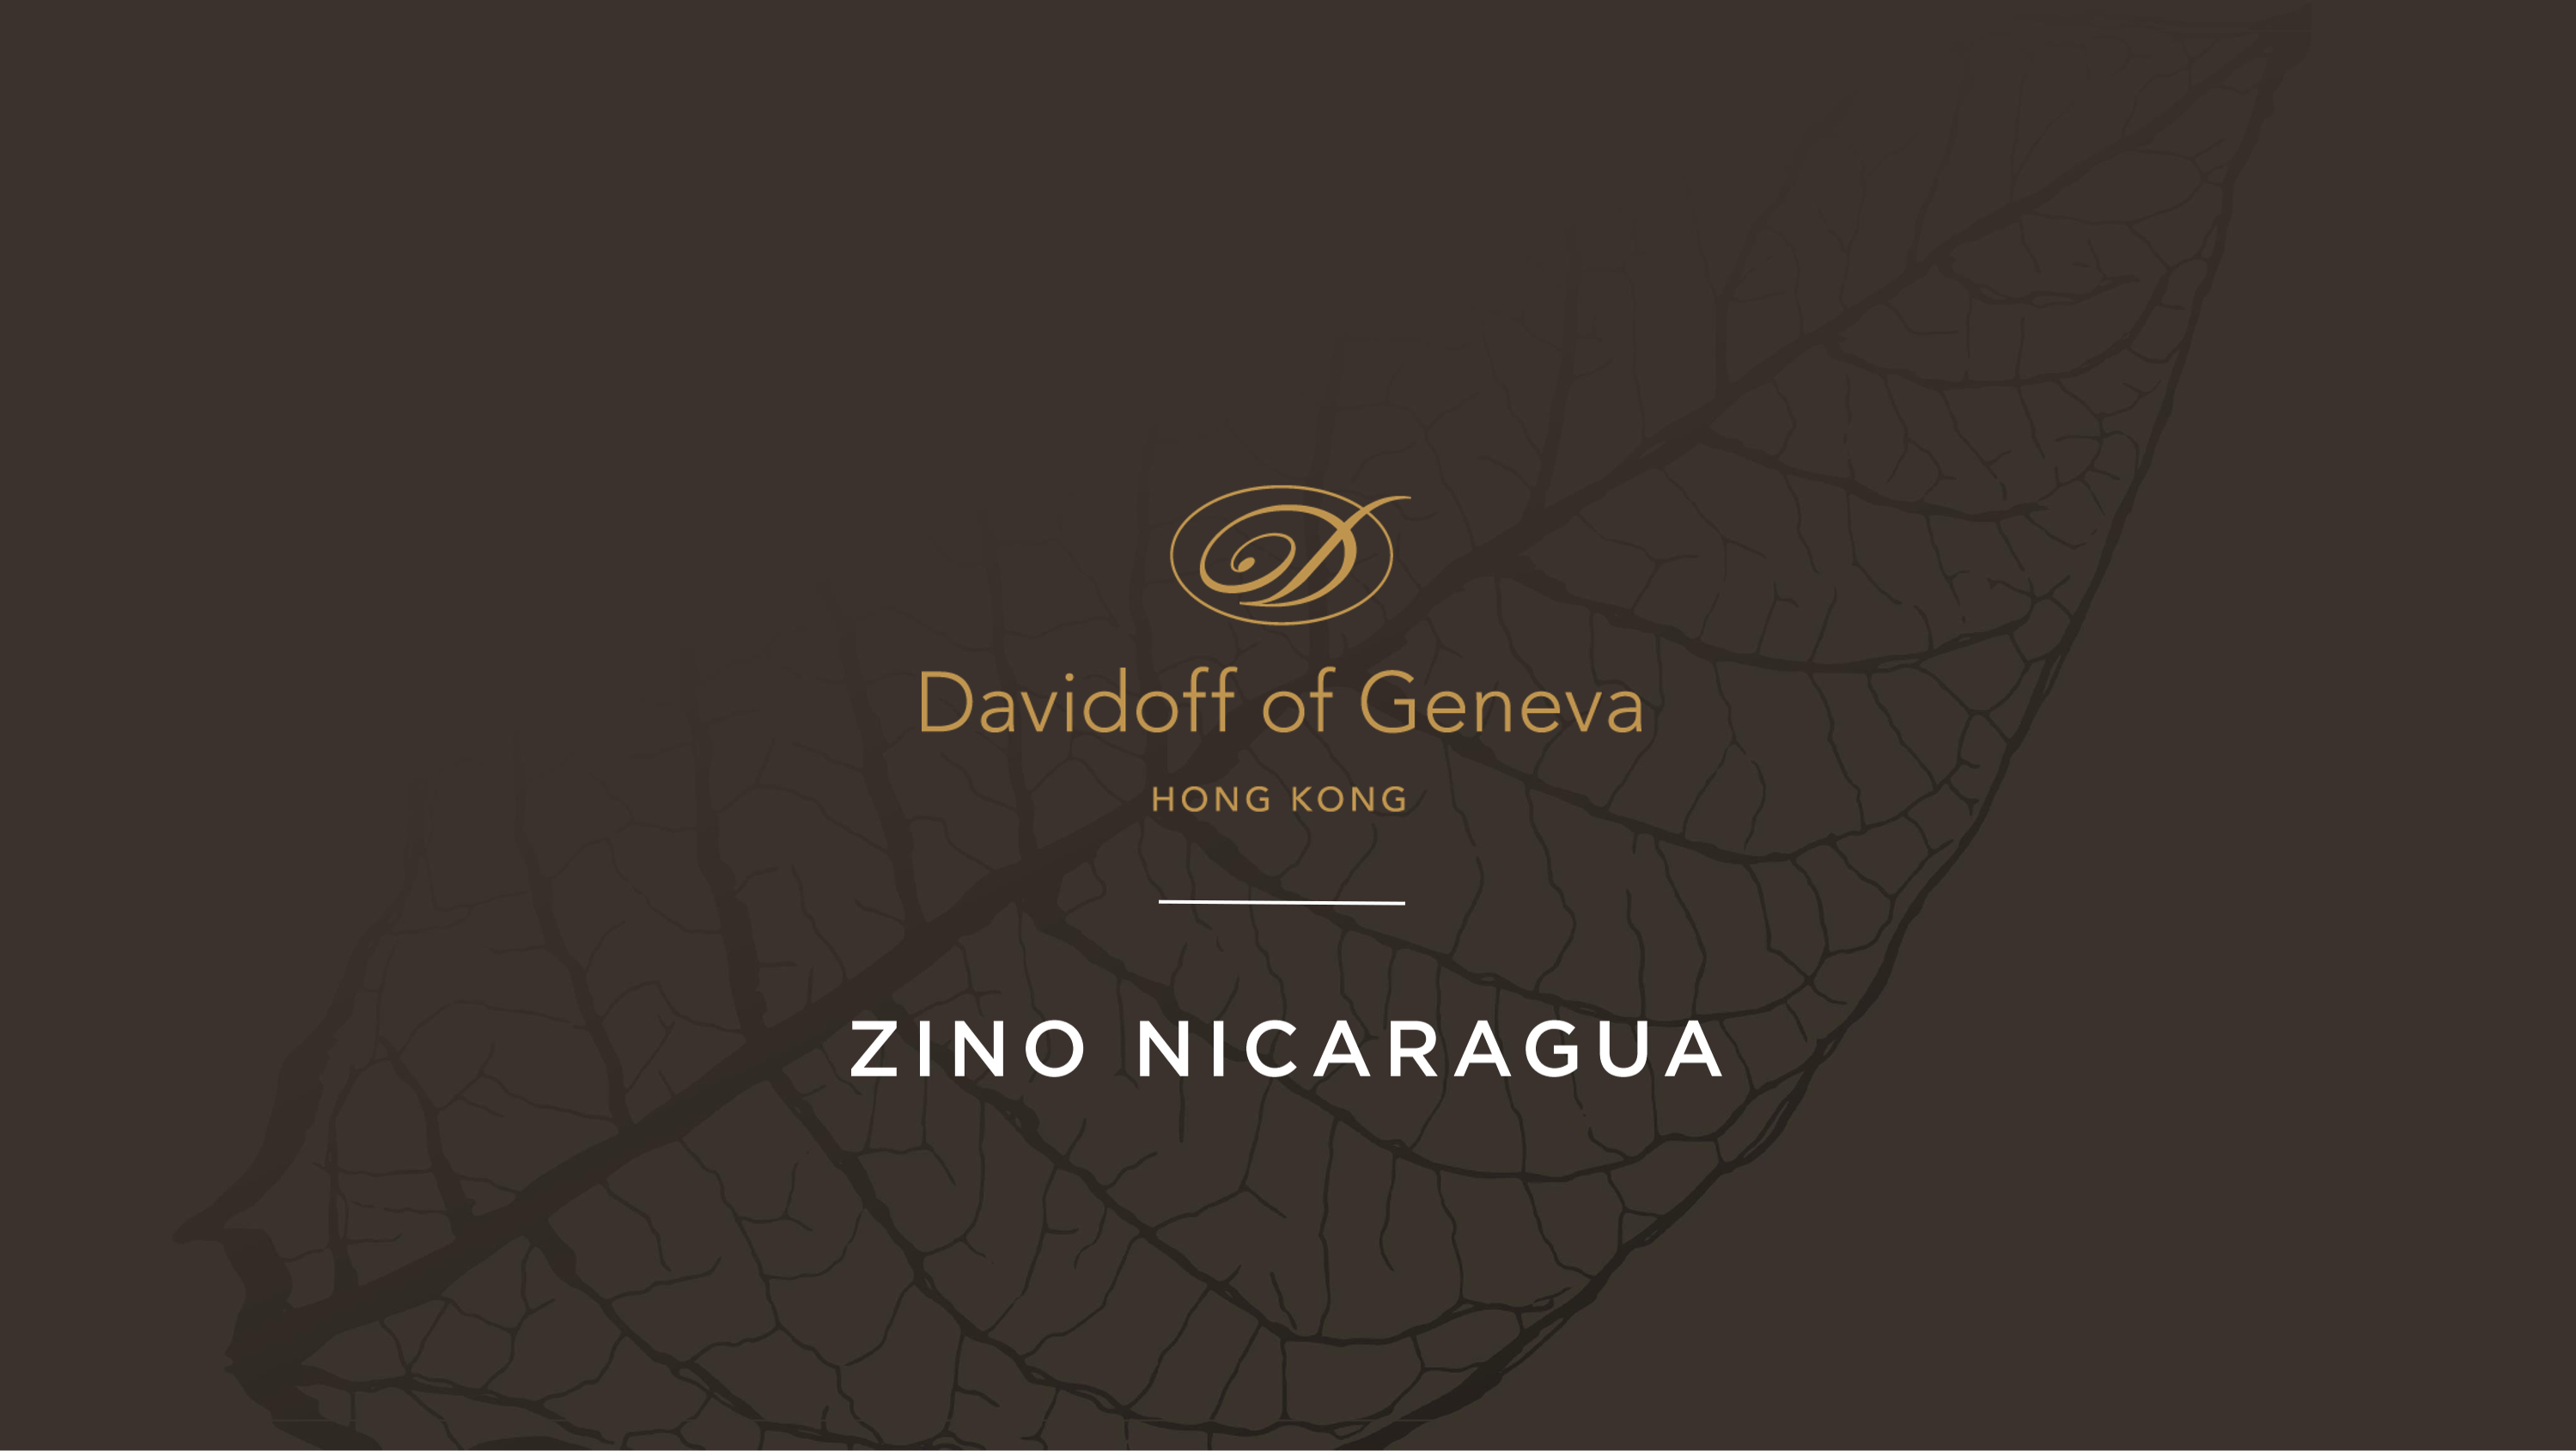 Davidoff of Geneva - ZINO NICARAGUA